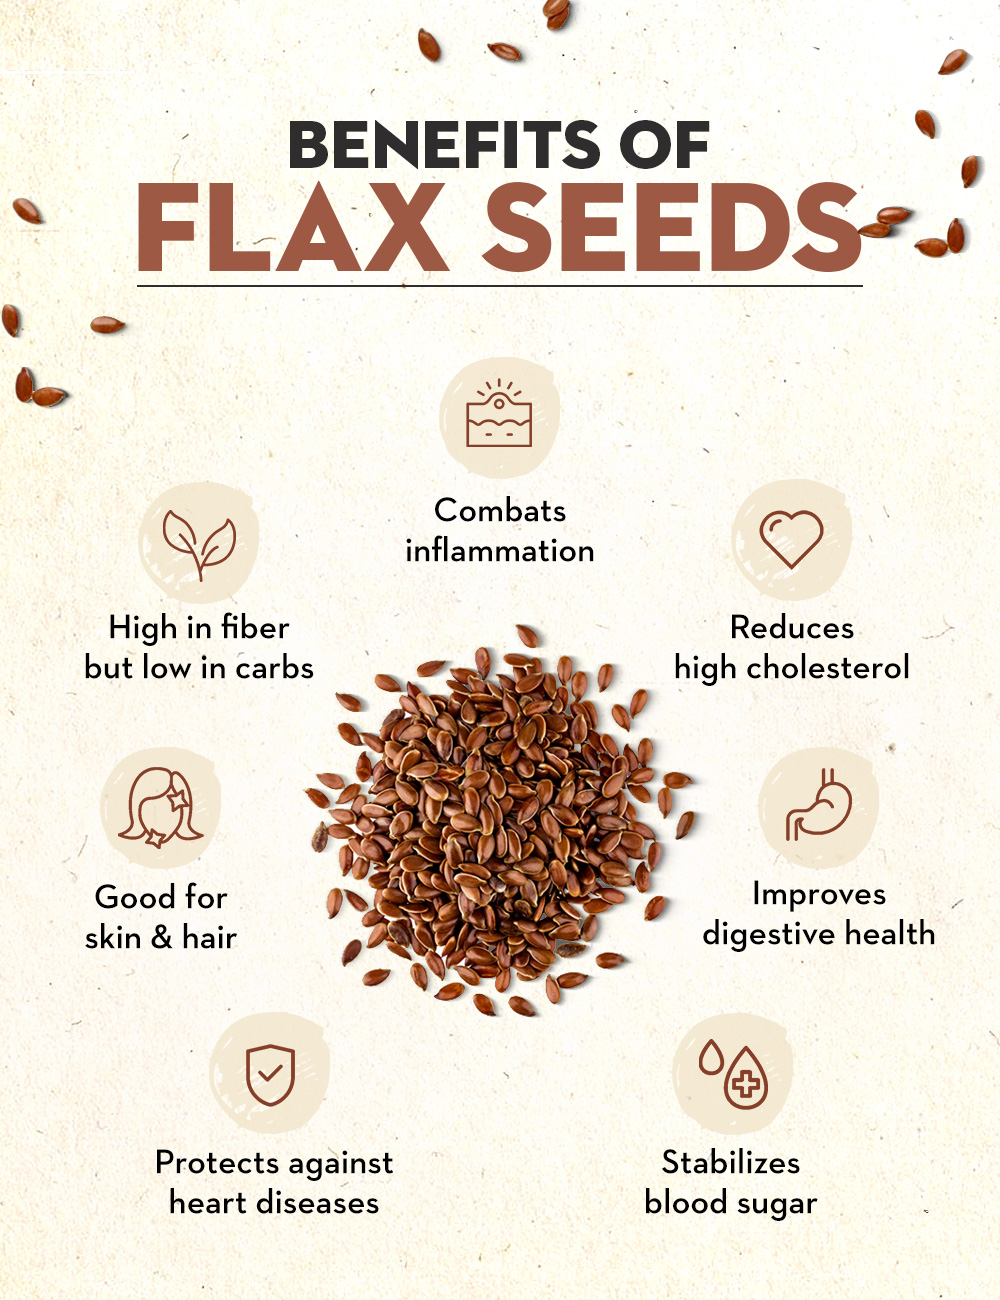 6 Fantastic Beauty Benefits of Flax Seeds